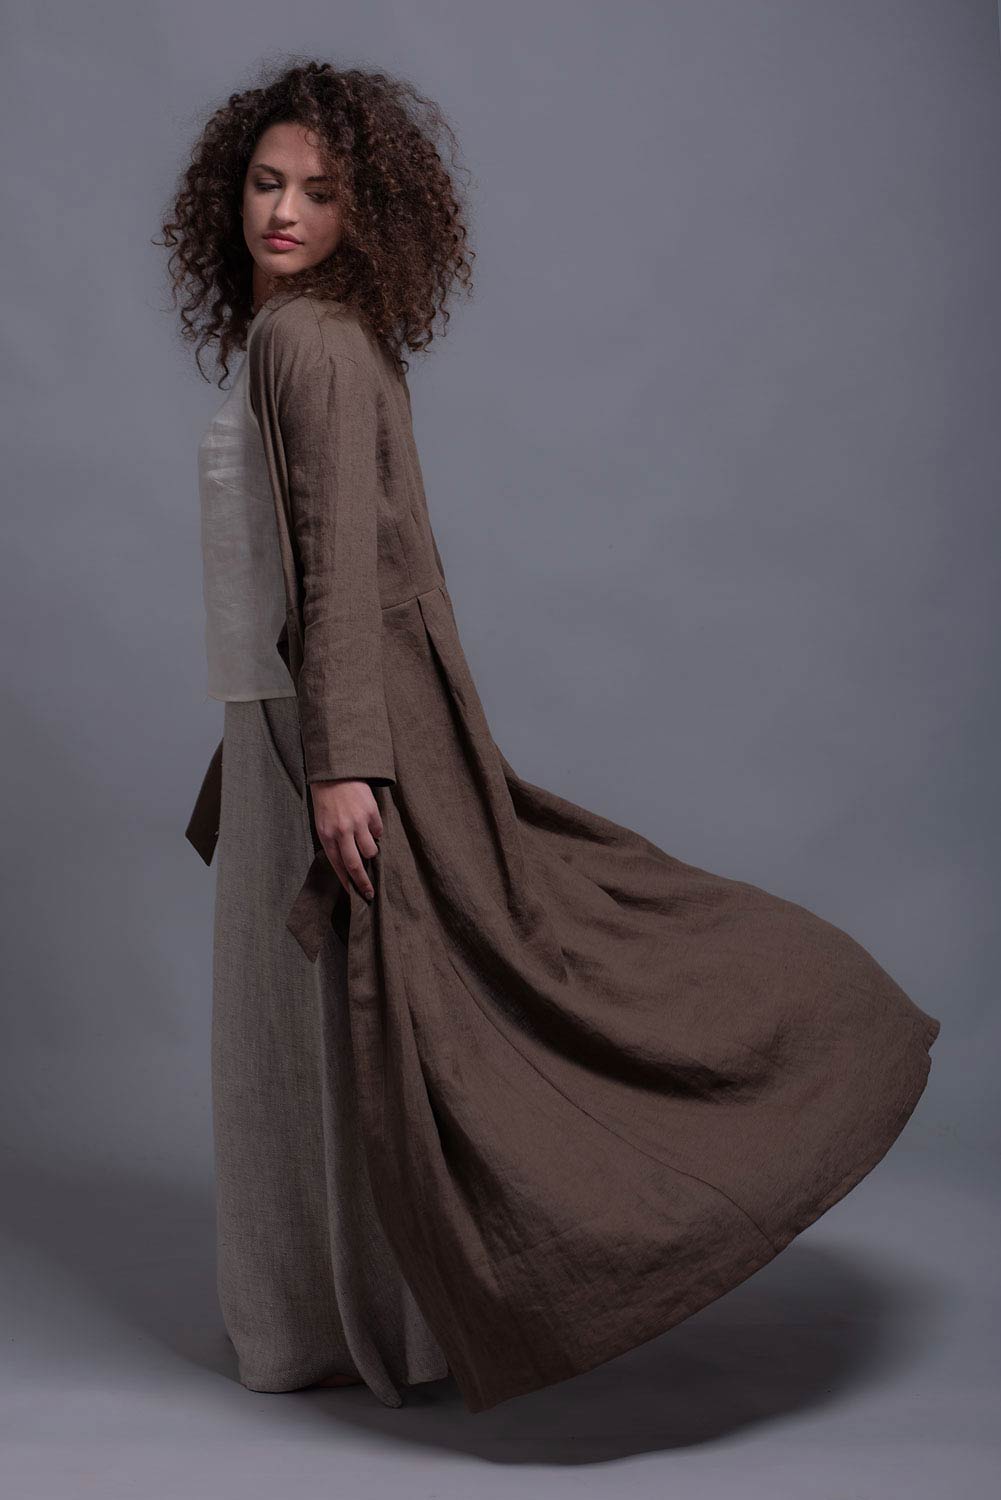 Leheriya Jacket Style Gown | Suit Set for Women – Kohsh